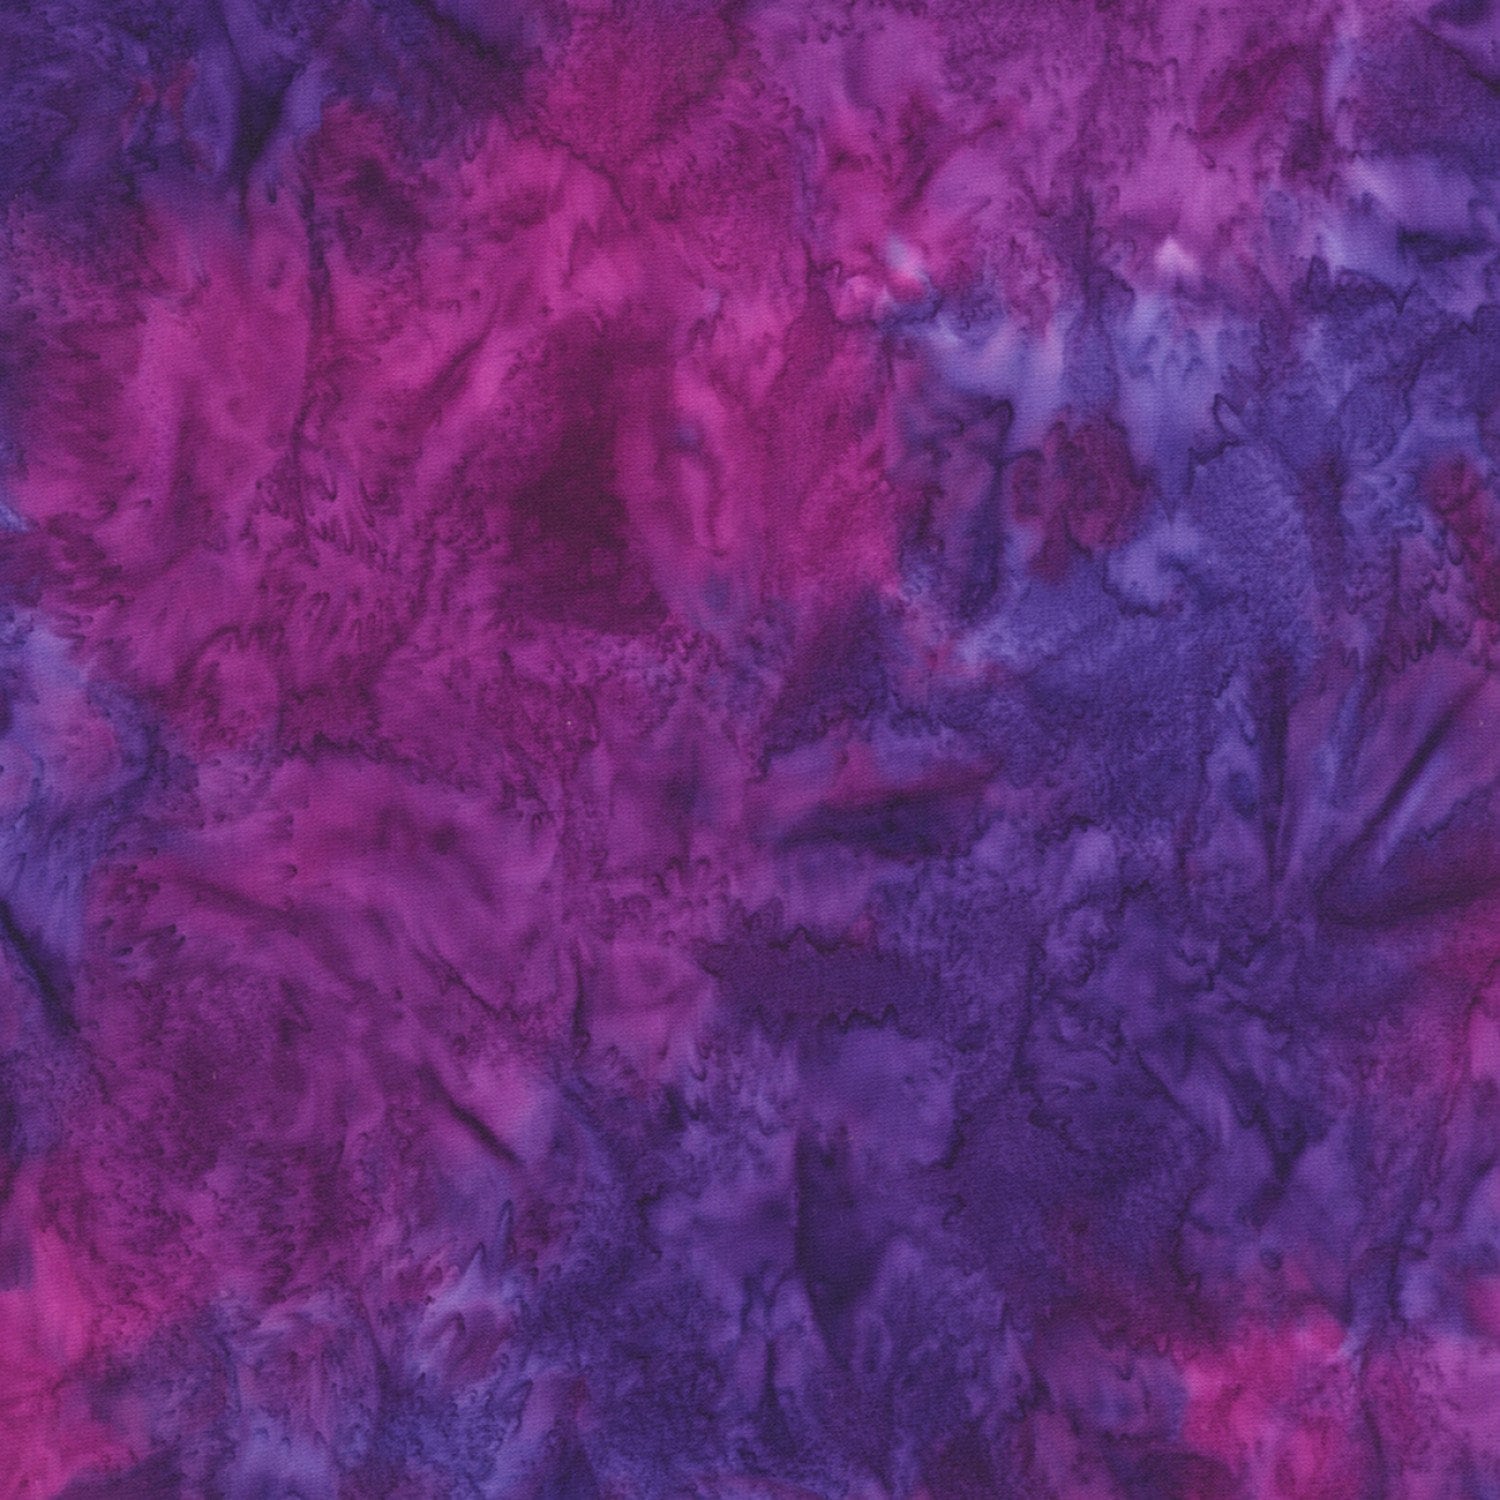 Lily Bella Batik Charm Squares, Robert Kaufman CHS-1170-42, Artisan Batiks Purple Green Floral Charm Pack, 5" Inch Precut Fabric Squares